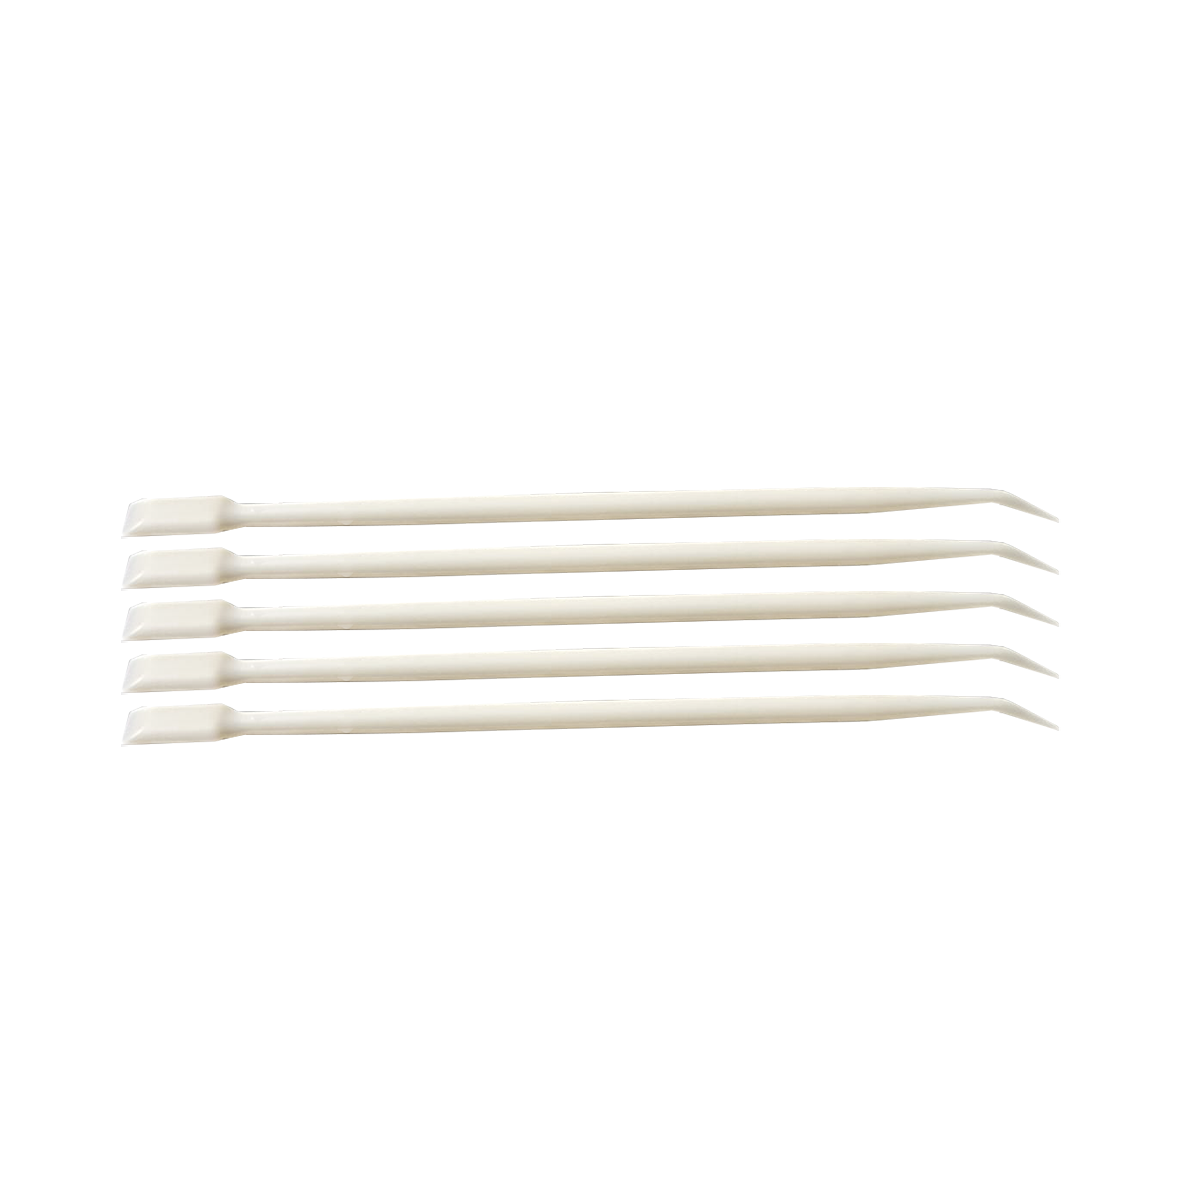 Lash Lifting Sticks | Lifter & Spachtel 2in1 | 5 Stück